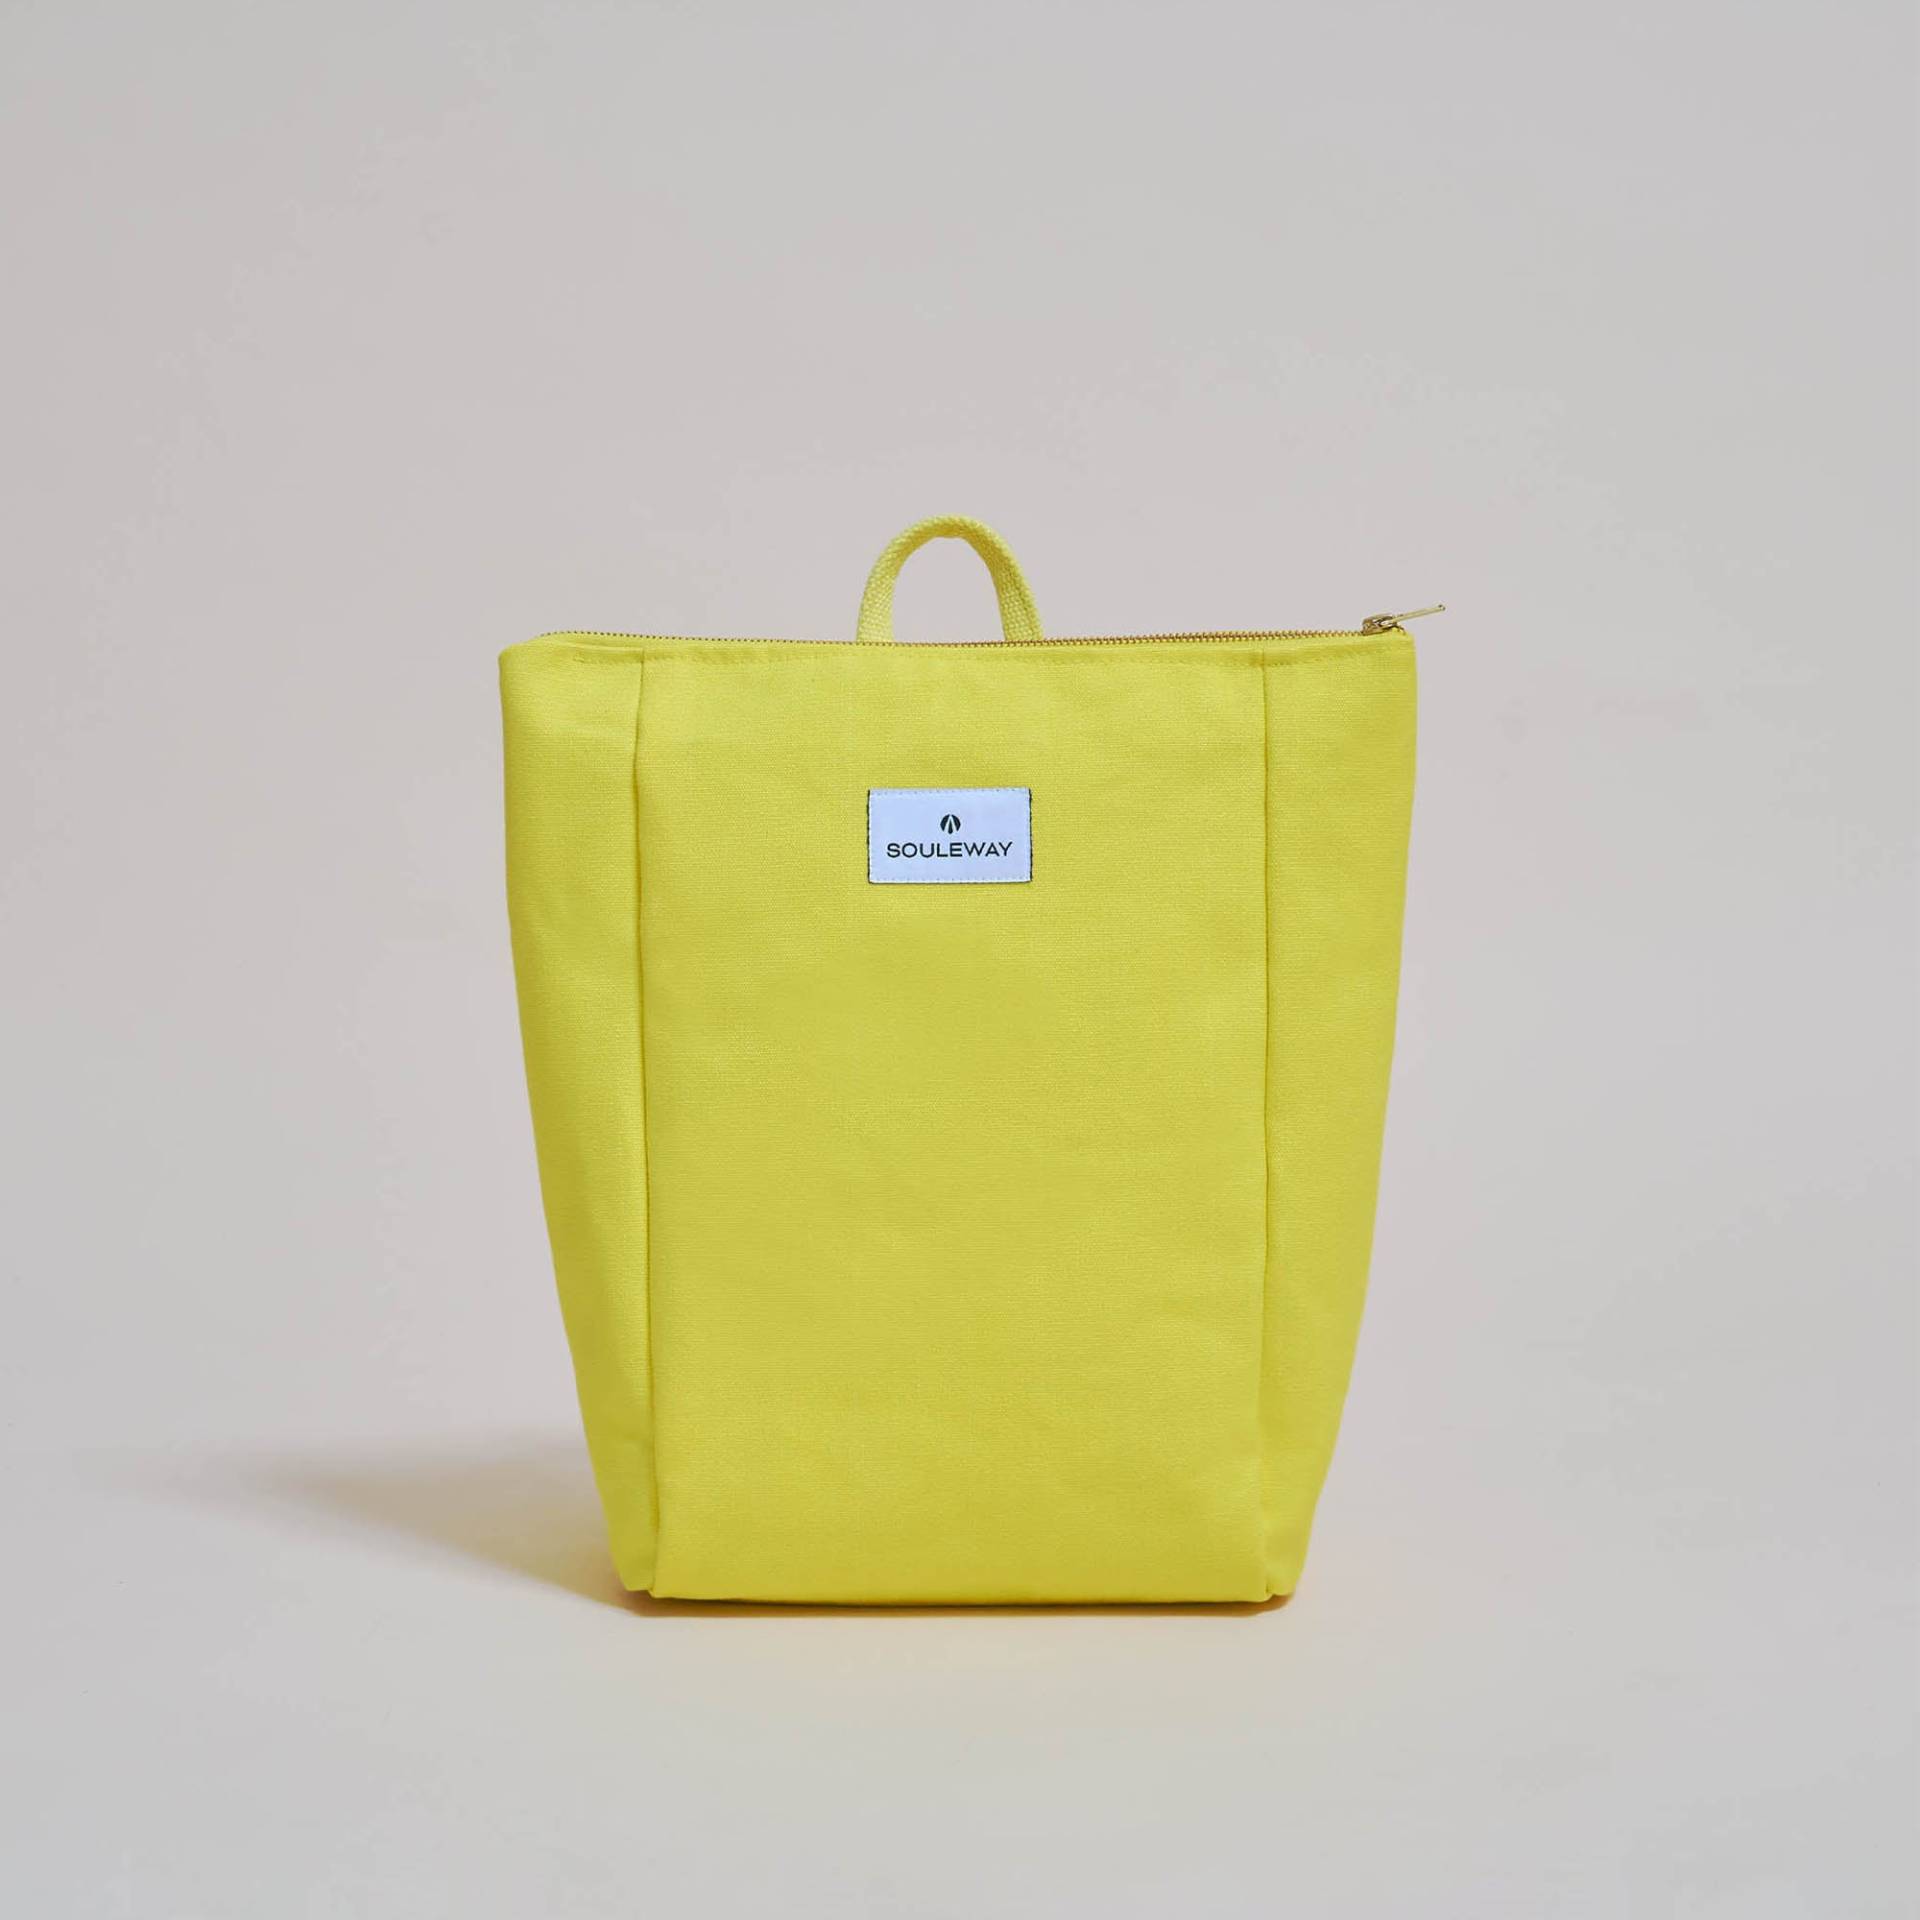 SOULEWAY - Simple Backpack S, Rucksack, 9 Liter Volumen, Laptopfach 13 Zoll, Made in Germany, Handgepäck, vegan, wasserabweisend, Bright Lemon von Souleway